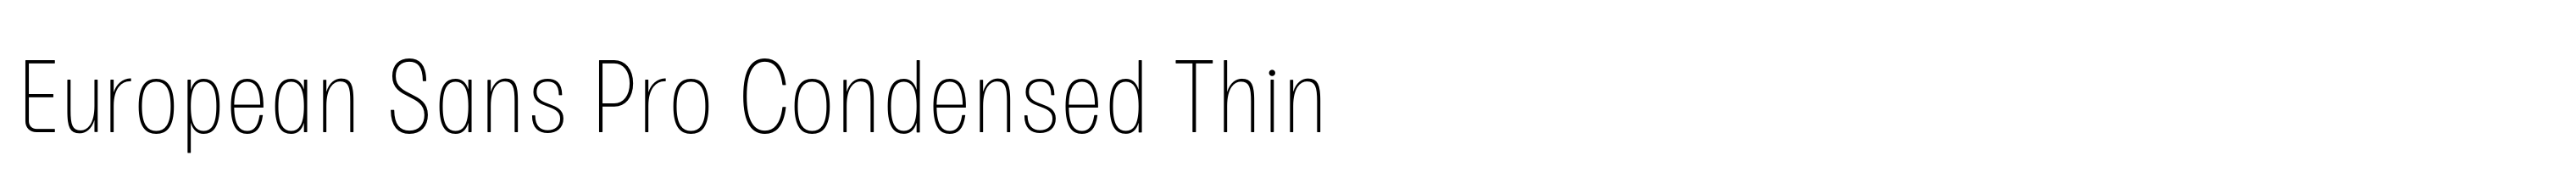 European Sans Pro Condensed Thin